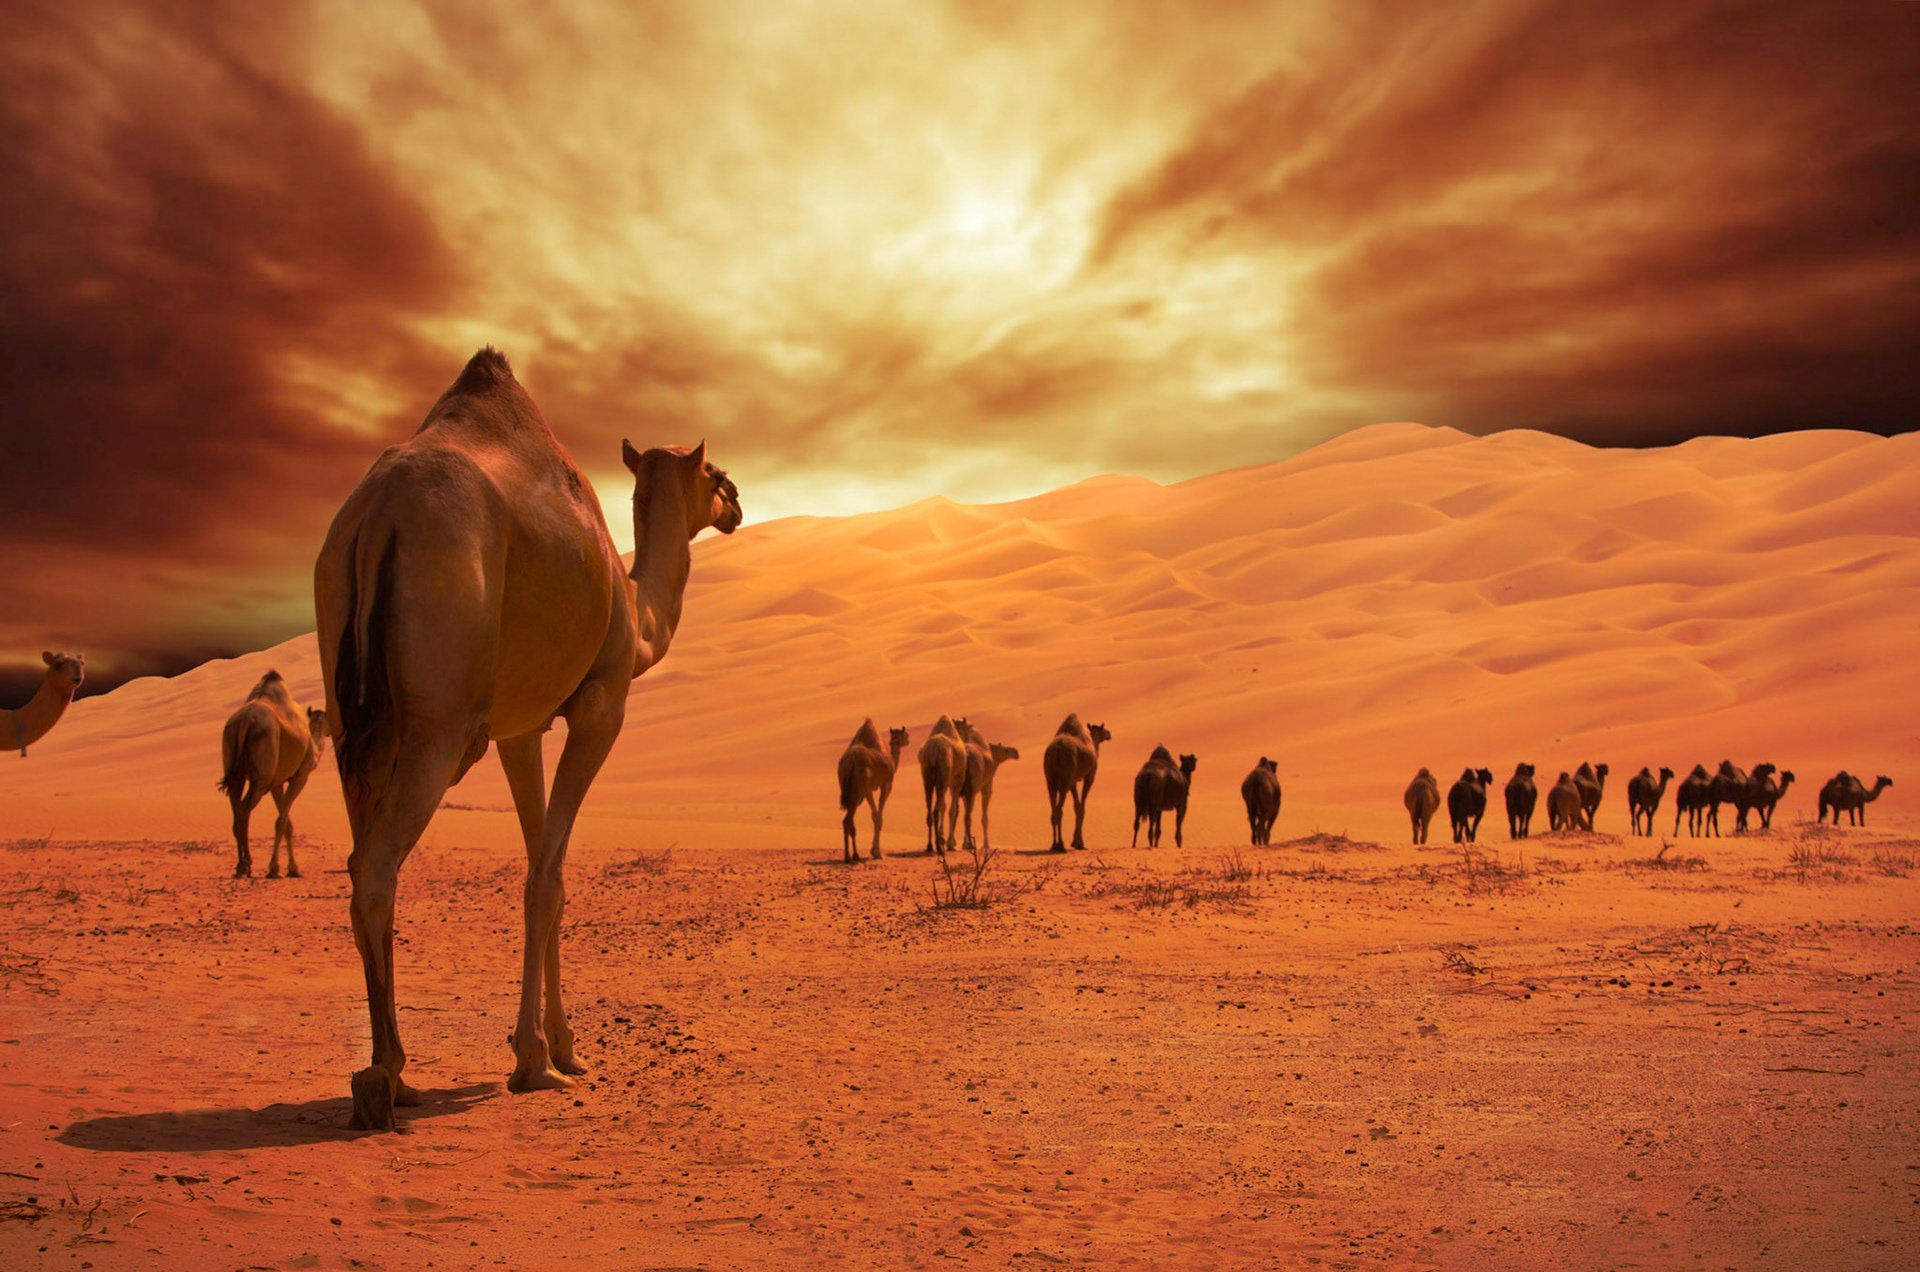 Караван картинка. Караван бактрианов. Абу Даби верблюд. Караван с верблюдами в пустыне. Пустыня Тенере.